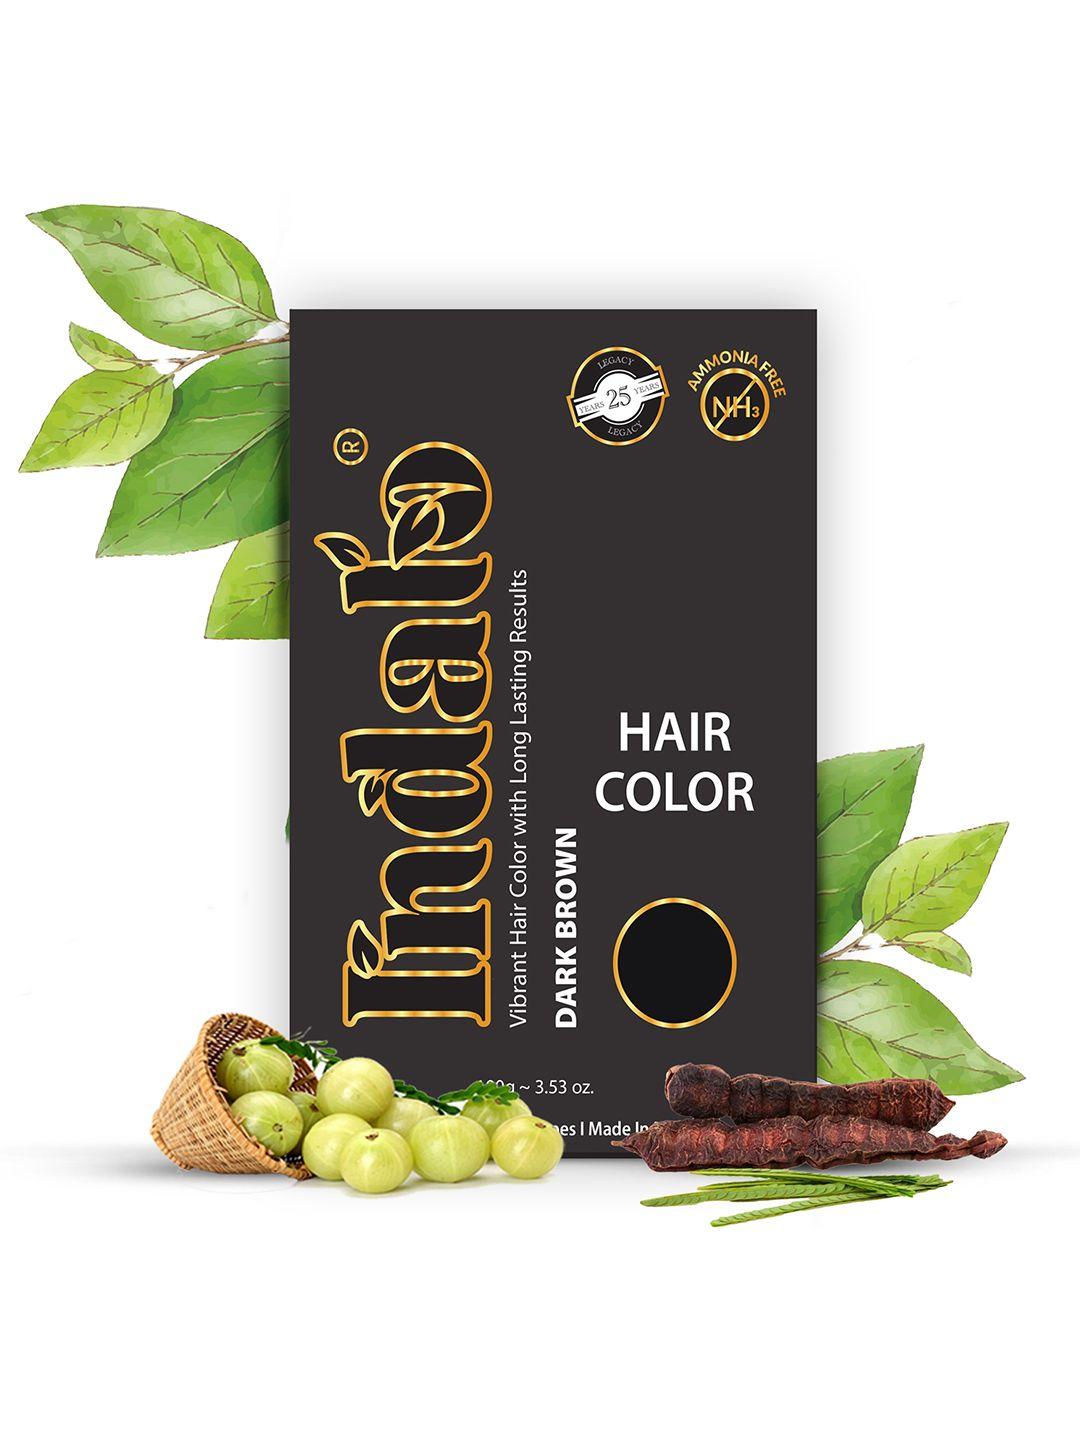 indalo set of 3 ammonia-free vibrant hair color - natural ingredient 100g each- dark brown